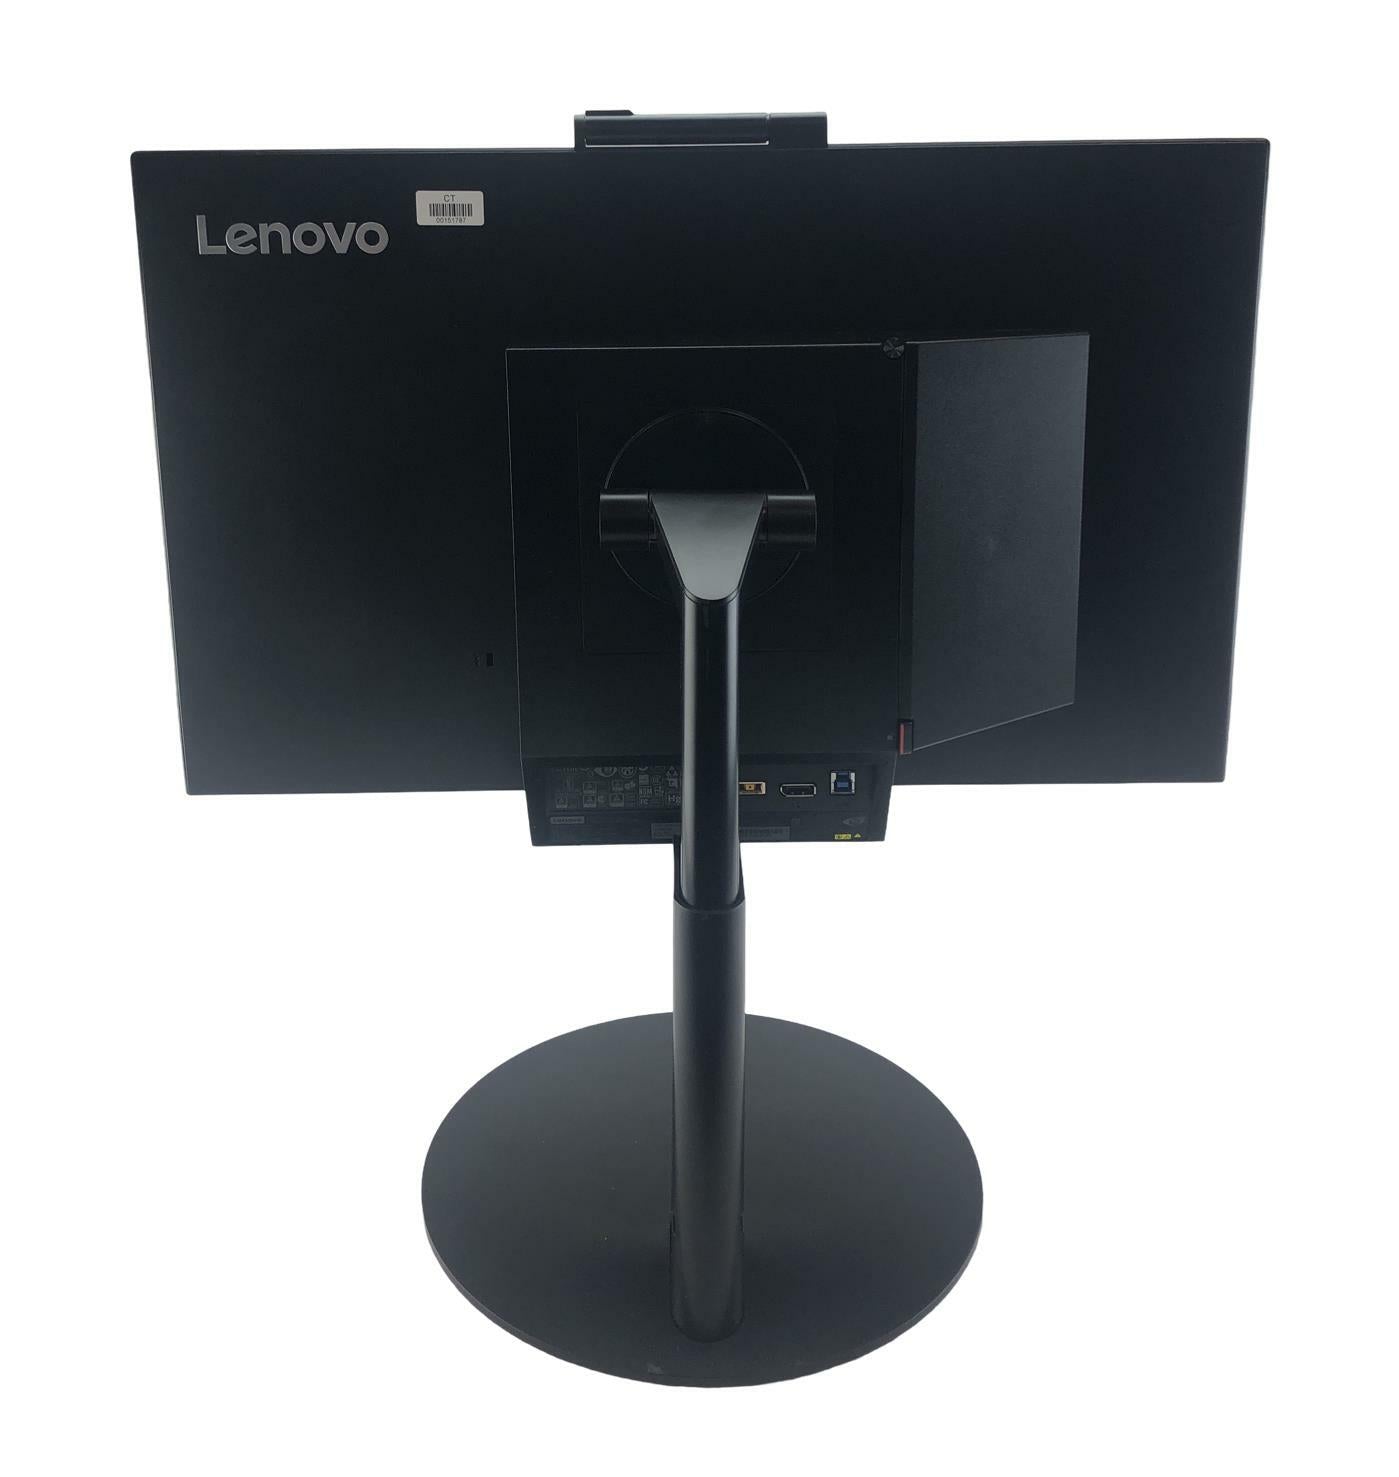 Lenovo ThinkCentre TIO24Gen3 23.8" IPS LED Display Monitor